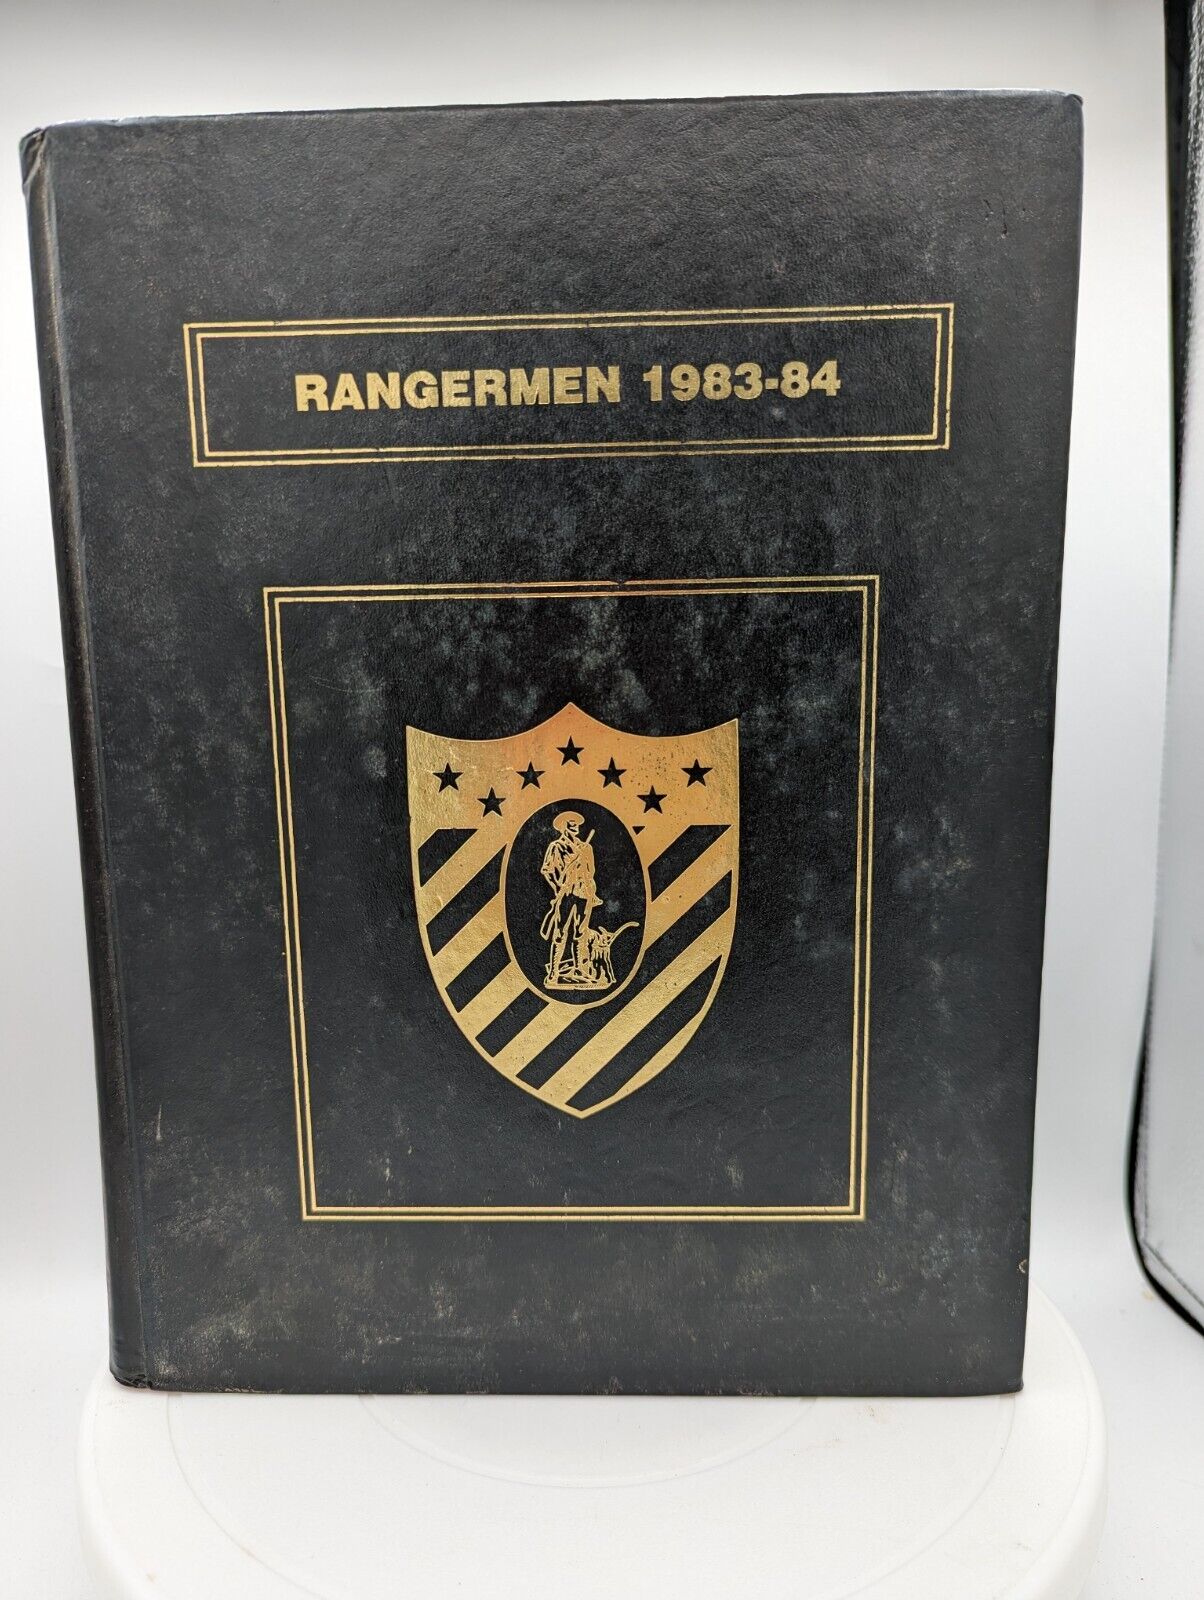 RARE USS RANGER CV-61 “RANGERMEN” 1983 1984 CRUISE BOOK Hardcover